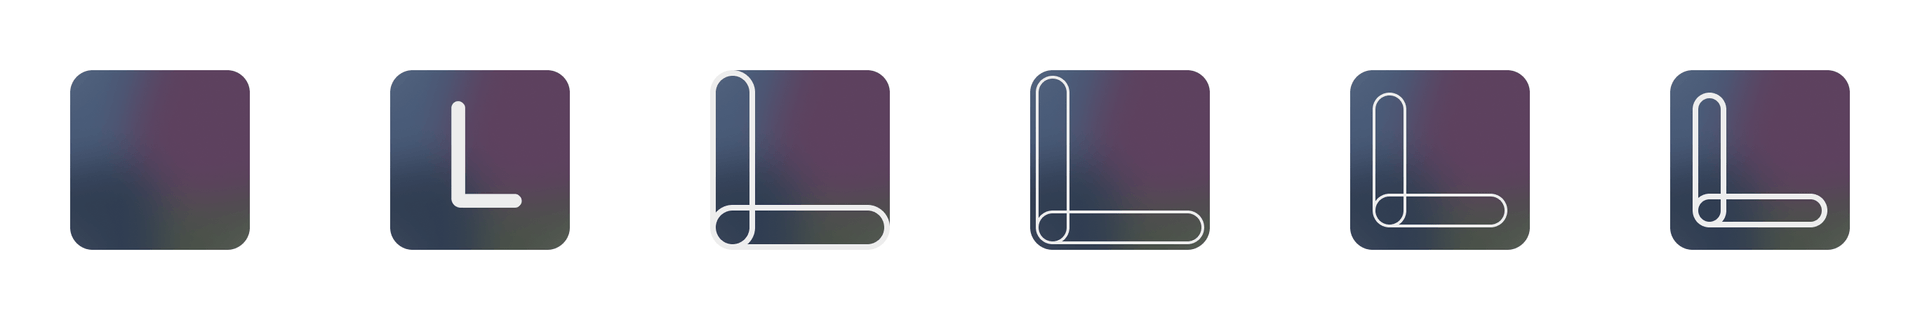 Lagom UI logo ideation in Figma using aurora gradients